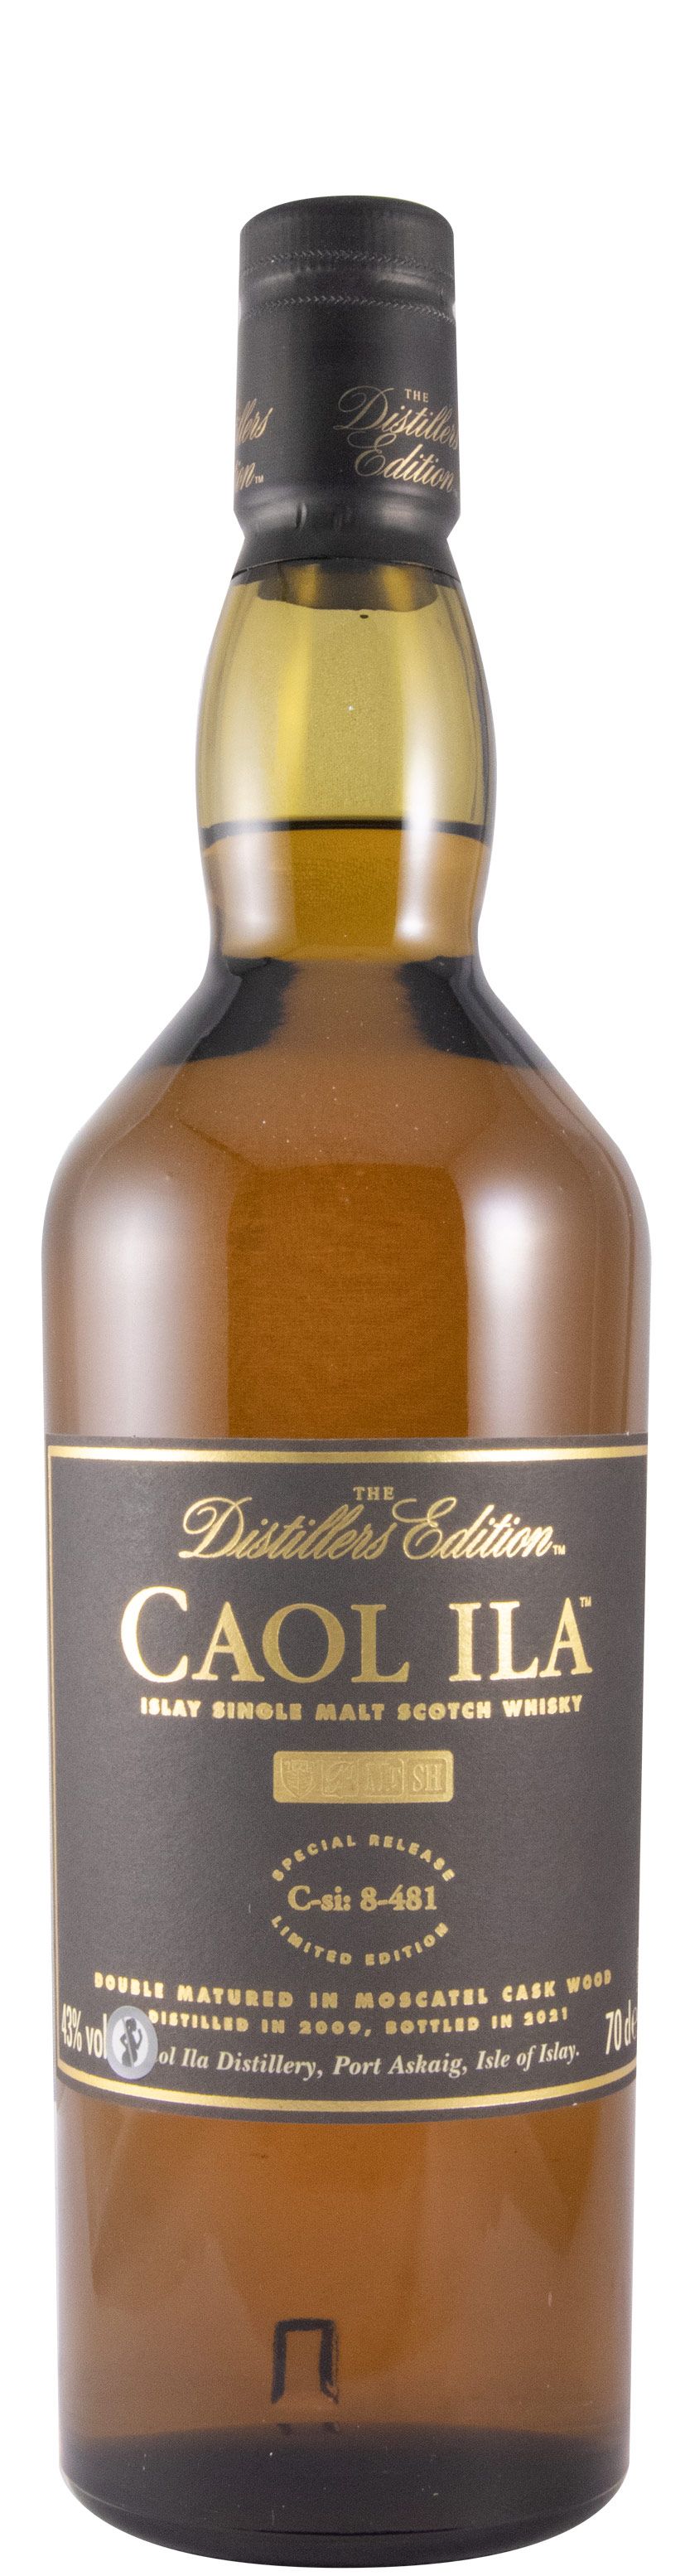 2009 Caol Ila Moscatel Cask Distillers Edition (bottled in 2021)